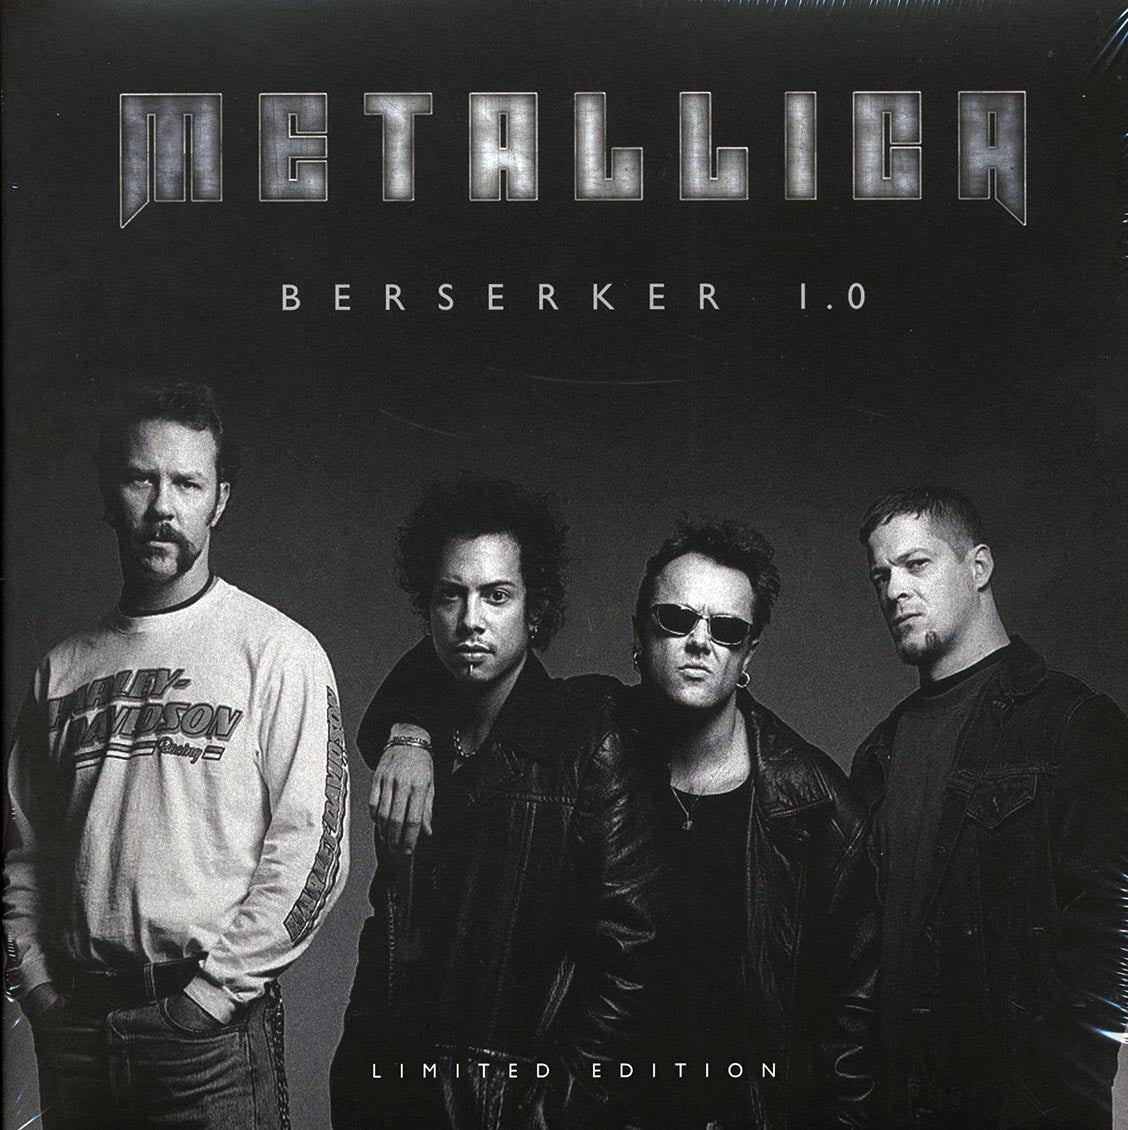 Metallica - Berserker 1.0 Copenhagen, Denmark, 27th November 1996 (ltd. ed.) (2xLP) (splatter vinyl) - Vinyl LP